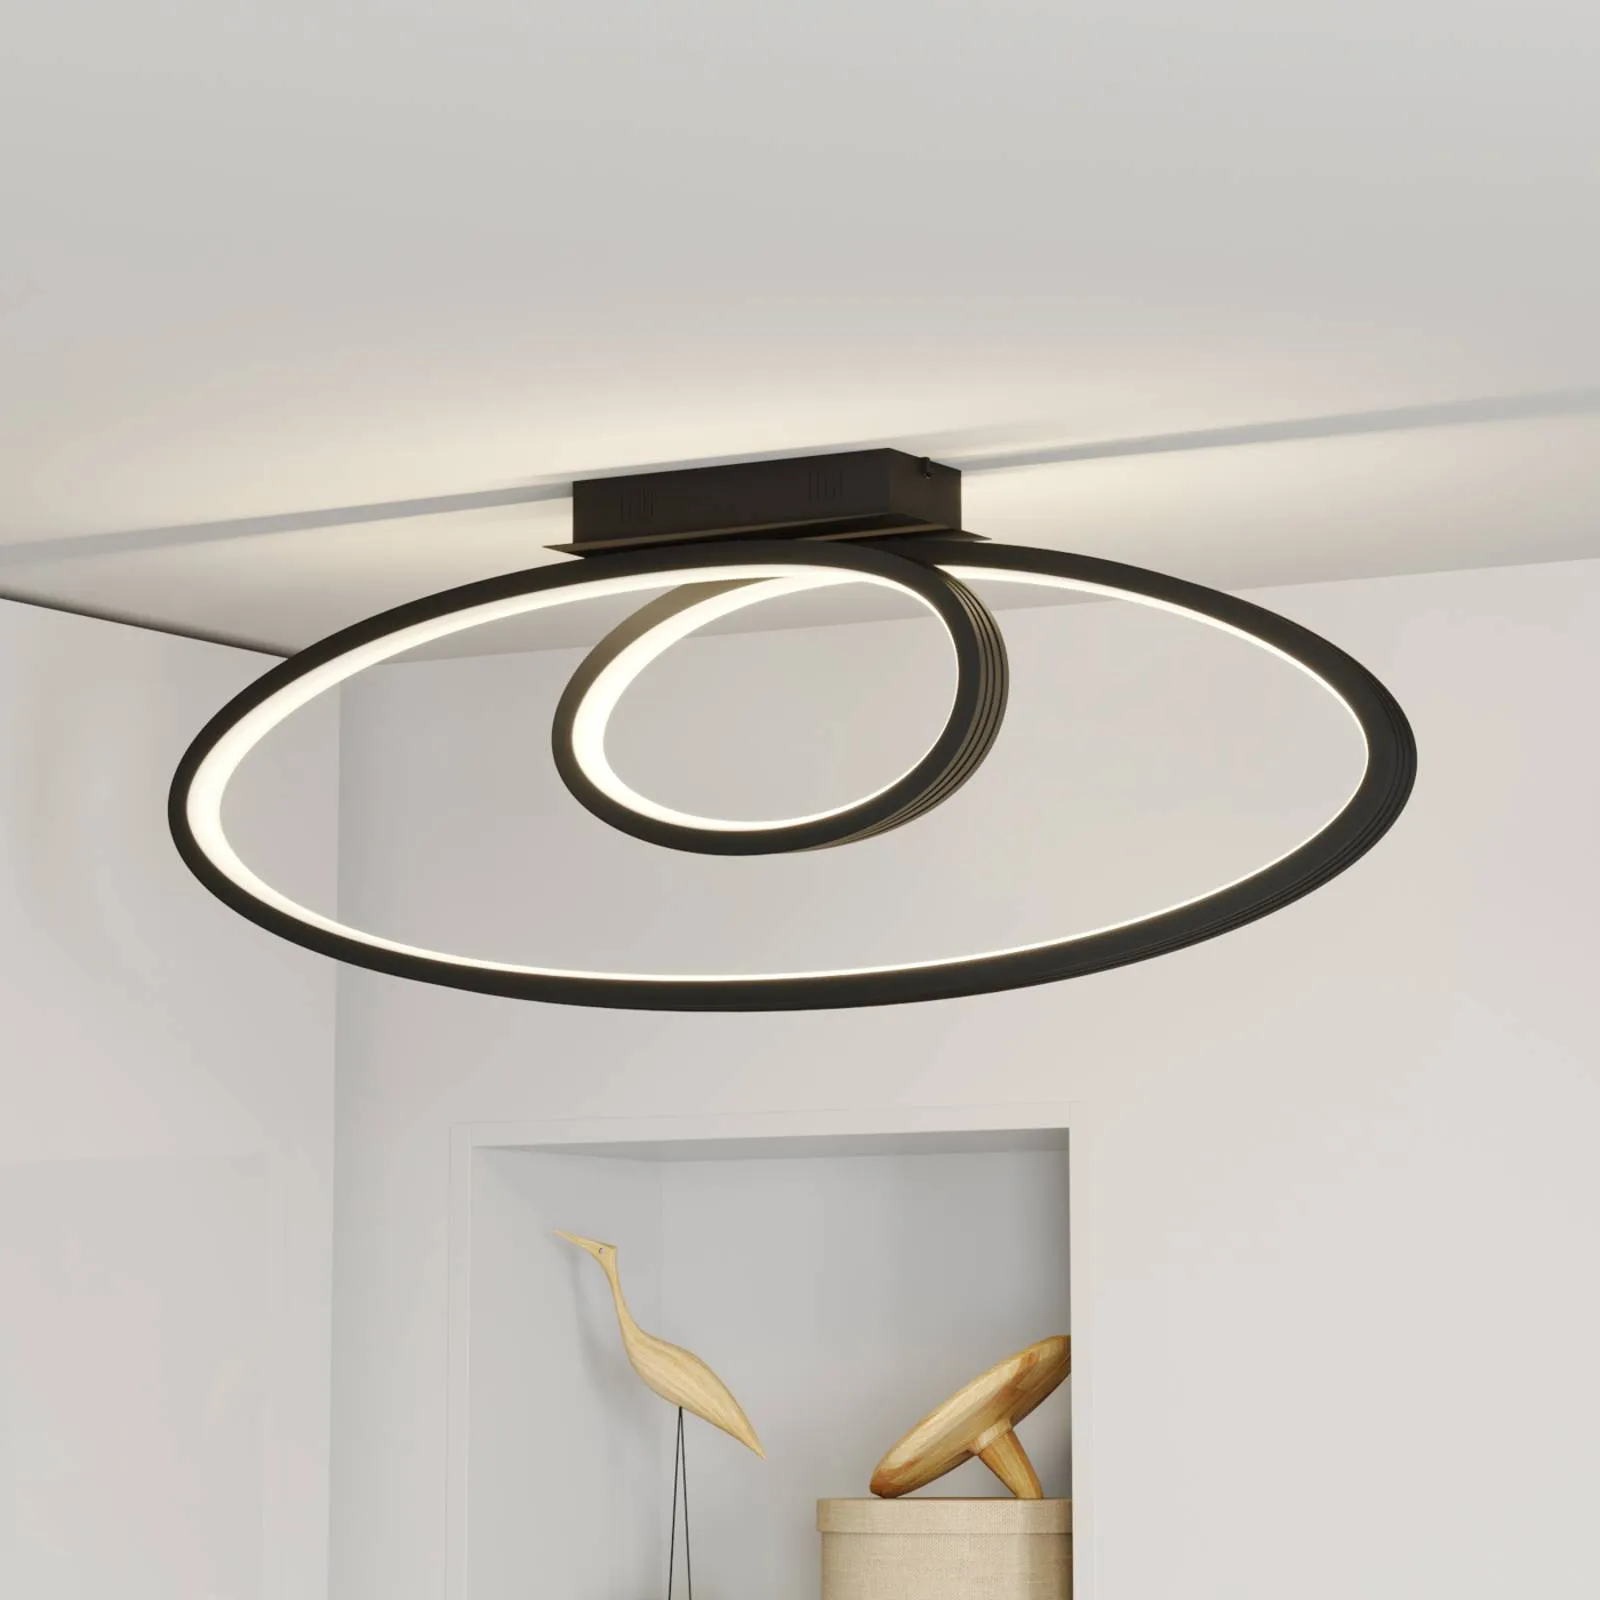 Lucande Bronwyn LED ceiling light, 98 cm